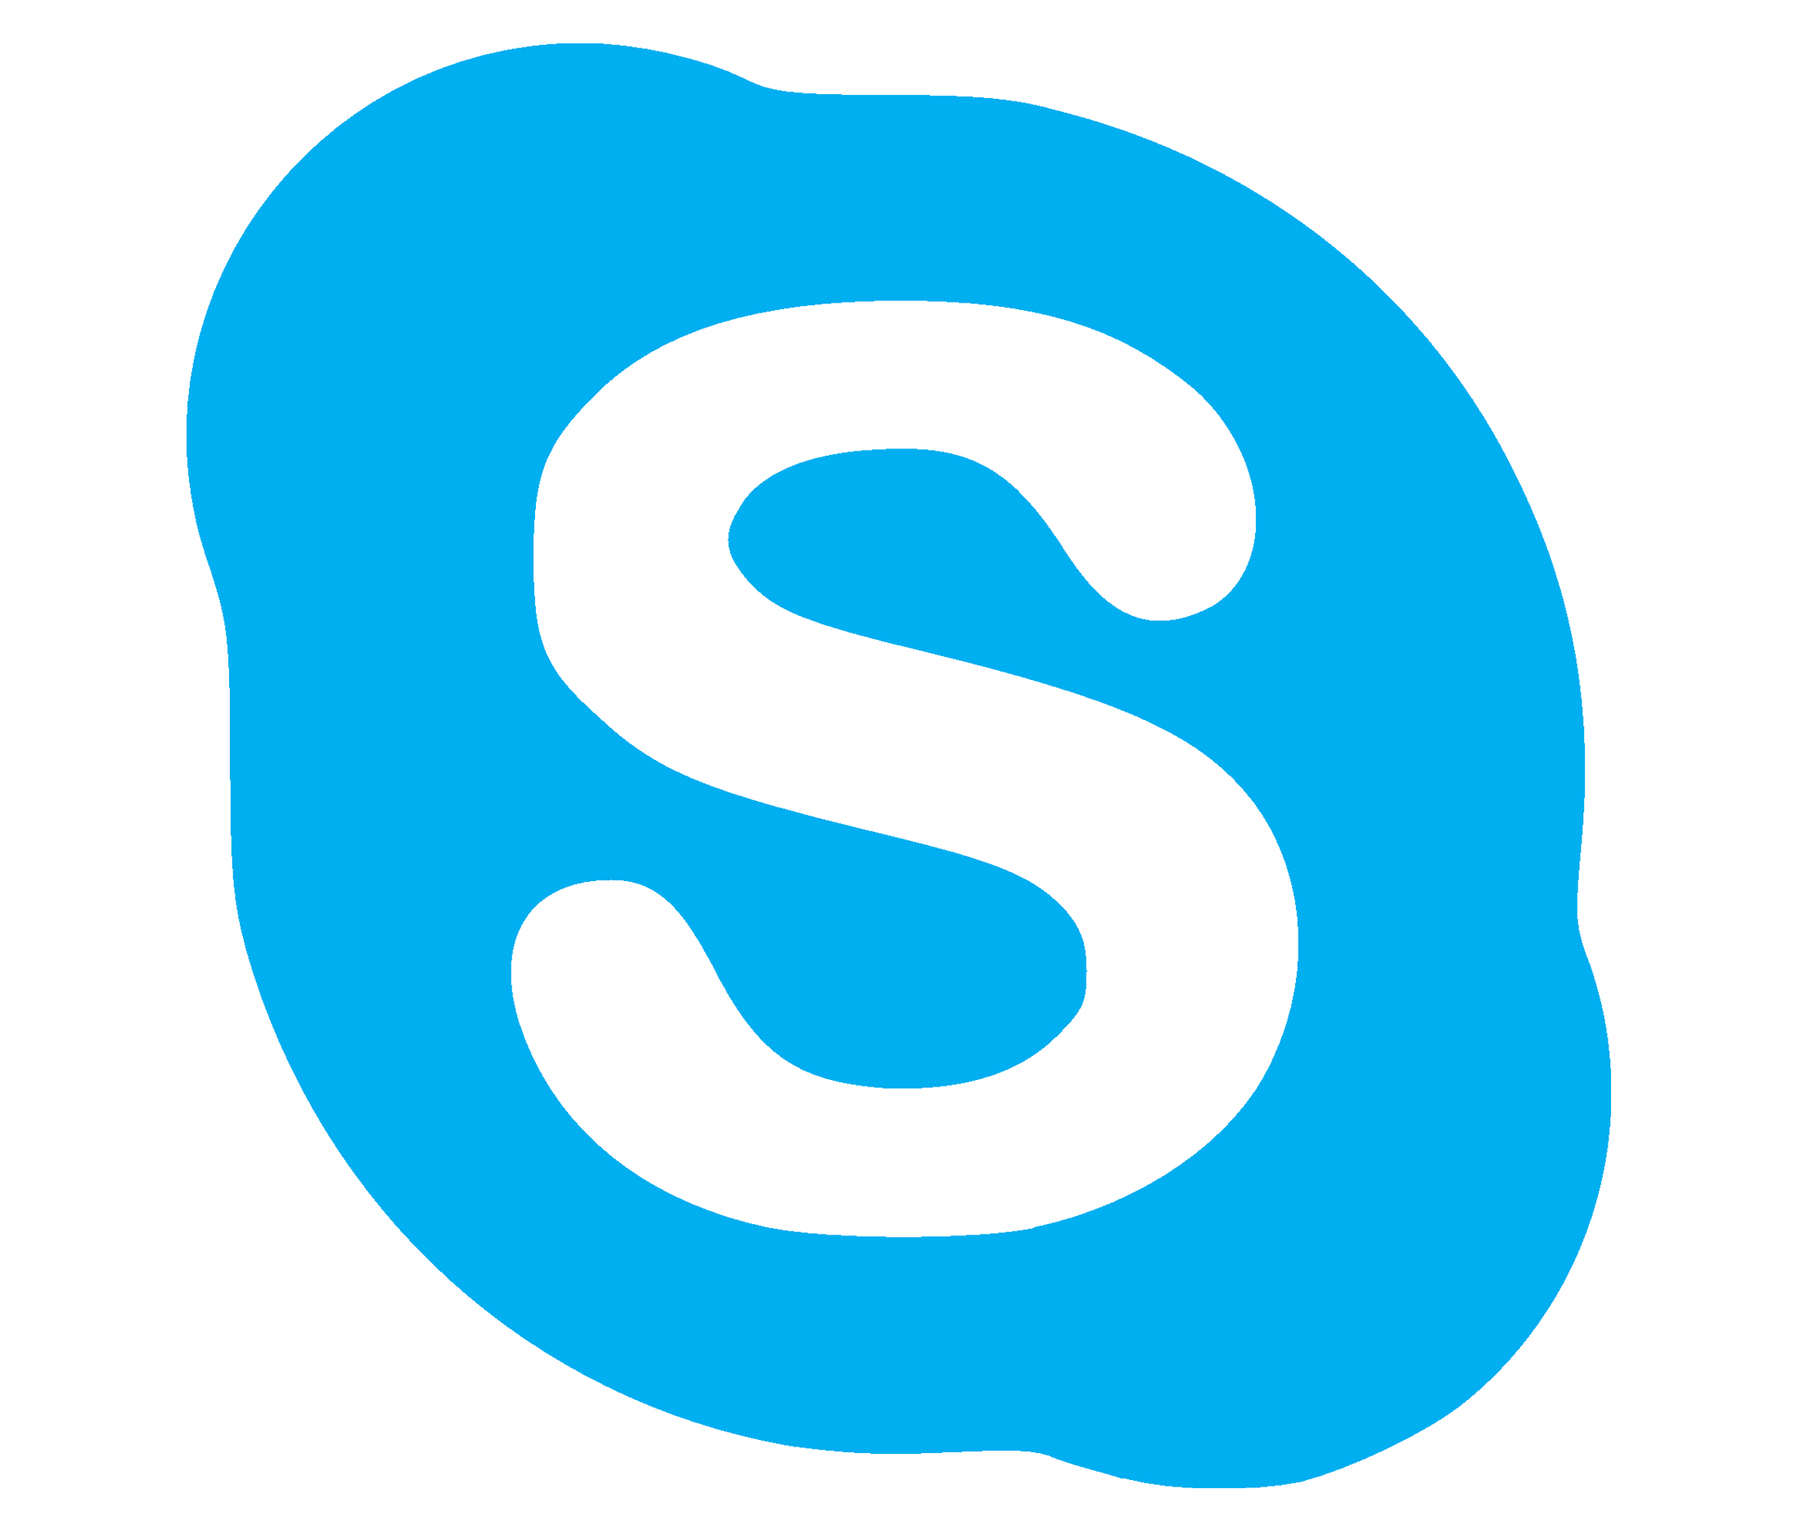 Sister skype